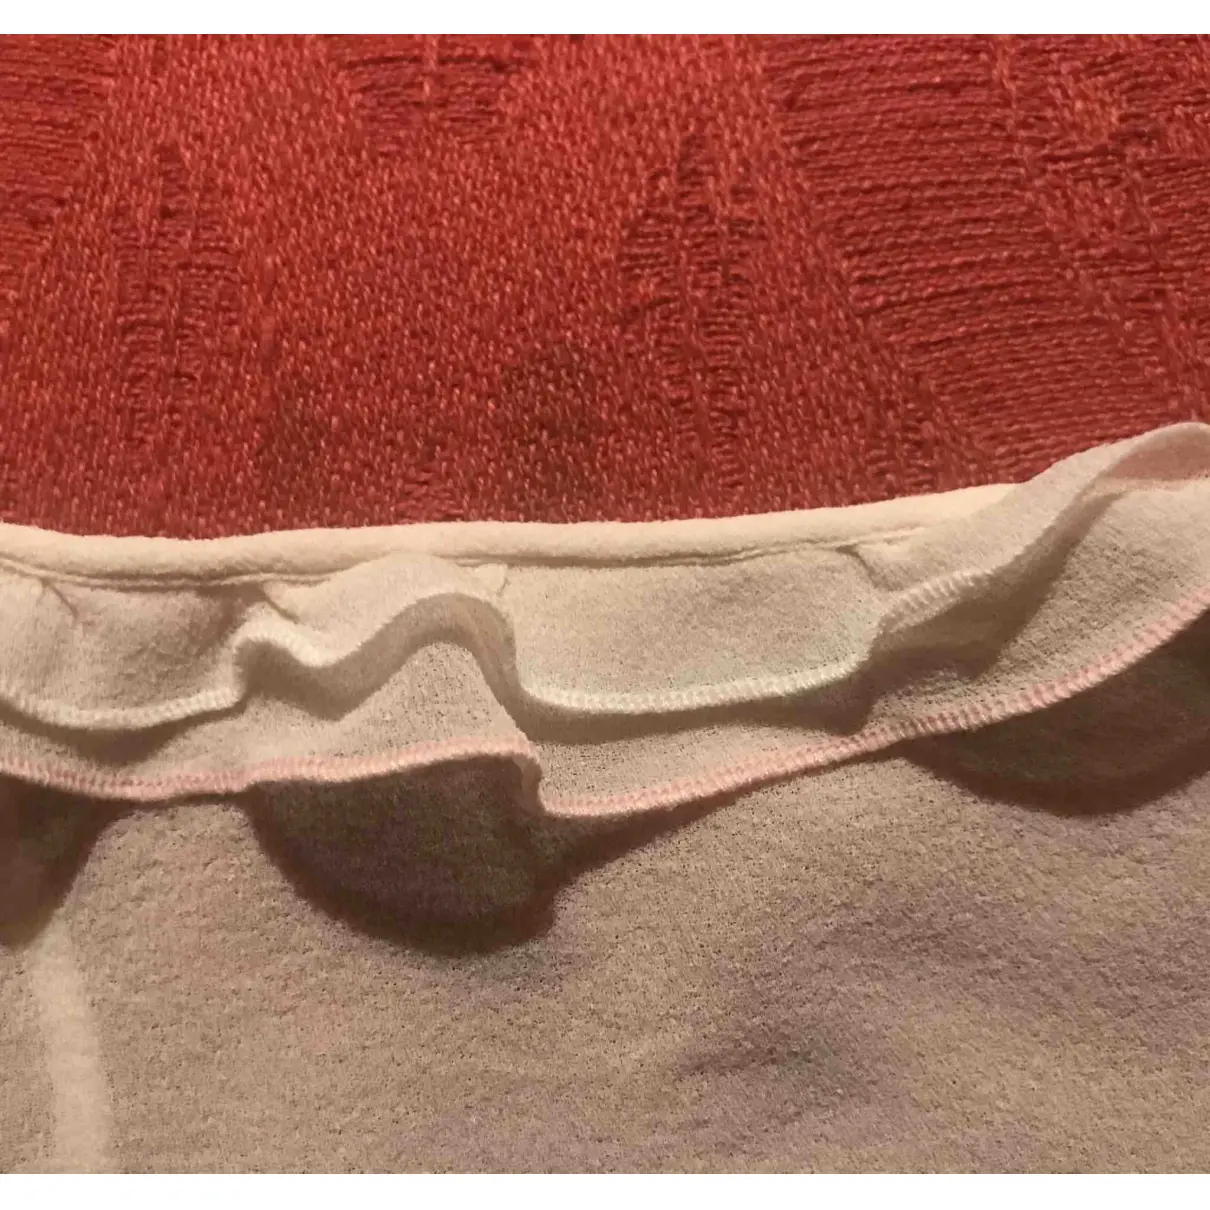 Silk lingerie Giorgio Armani